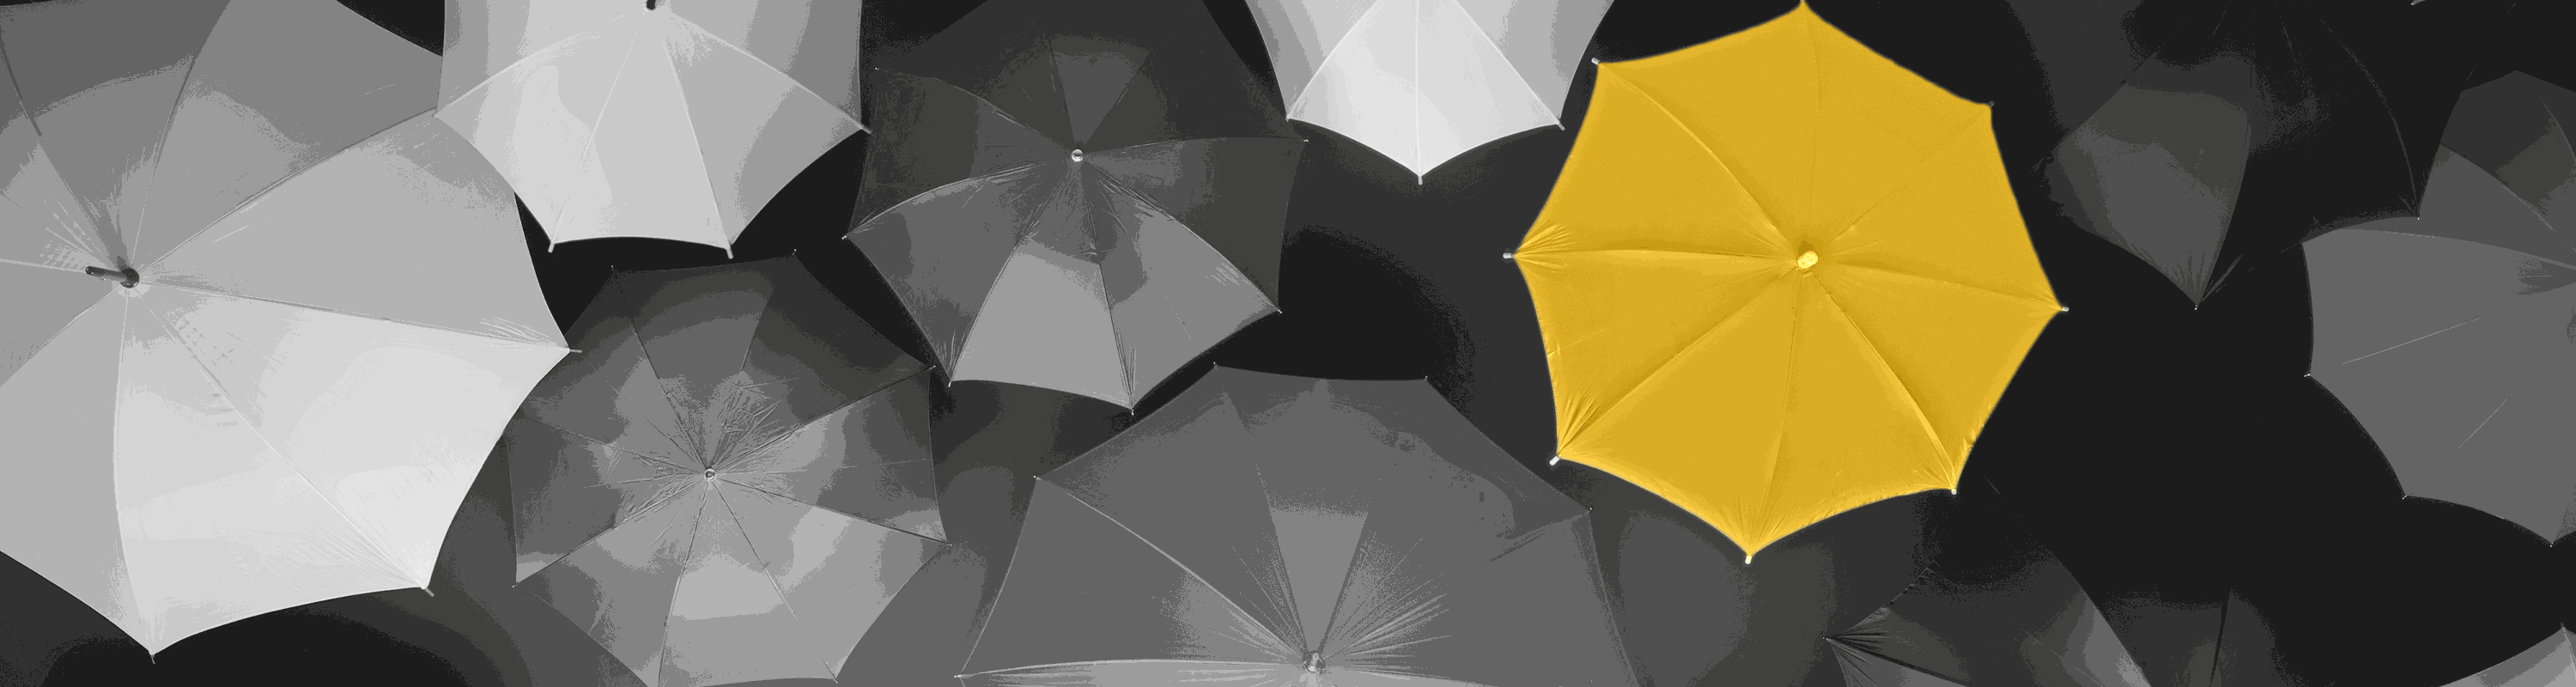 MAT_Slider1_umbrella